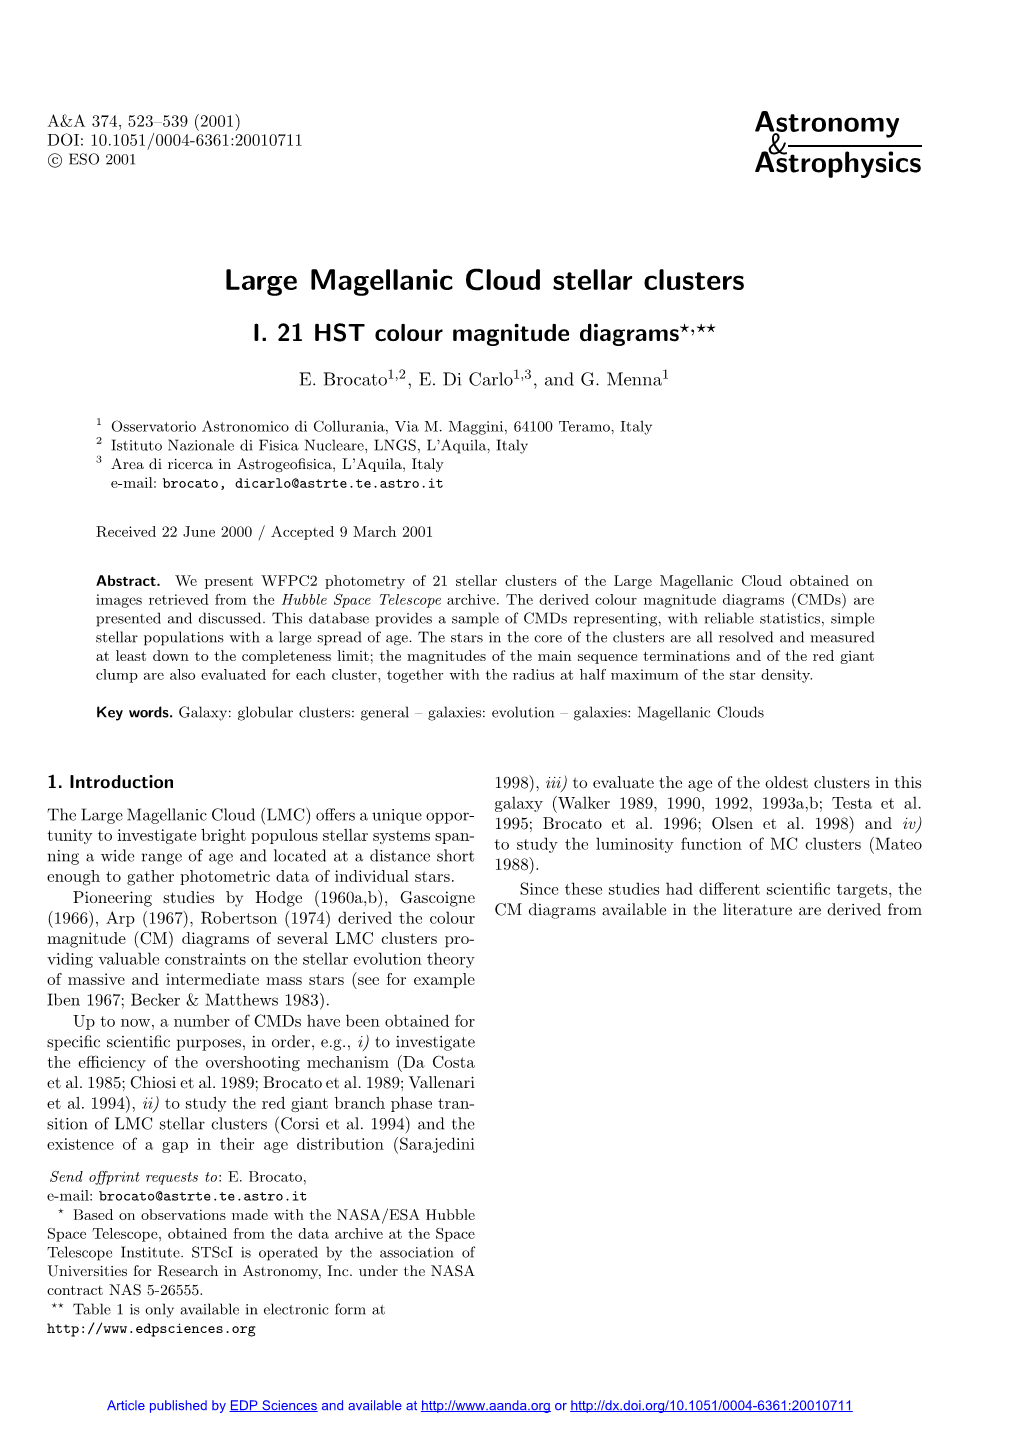 Large Magellanic Cloud Stellar Clusters